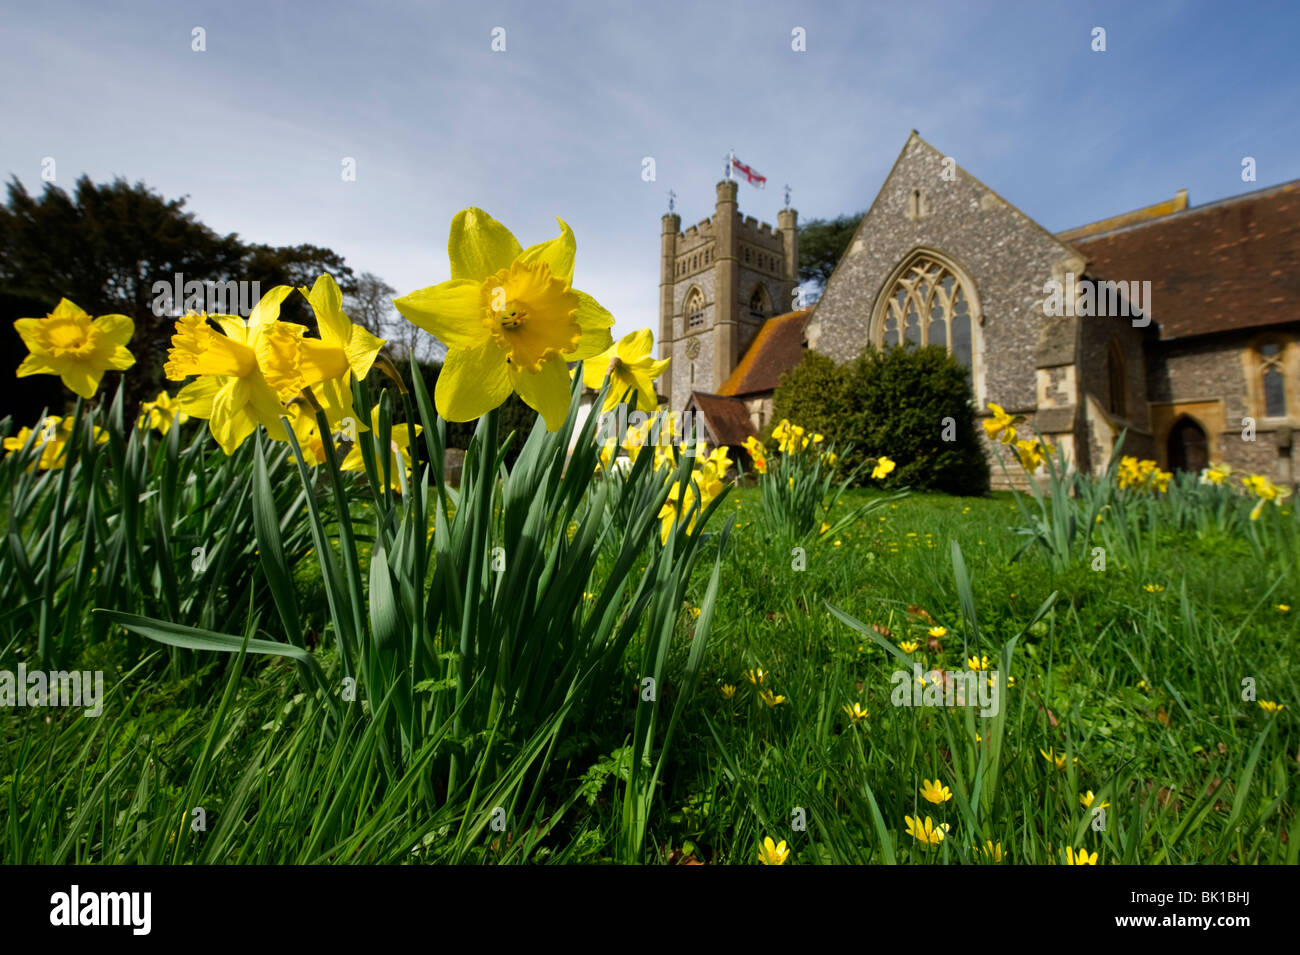 Churchyard Spring daffodils in the grounds of St Mary the Virgin parish church Hambleden Buckinghamshire UK Stock Photo